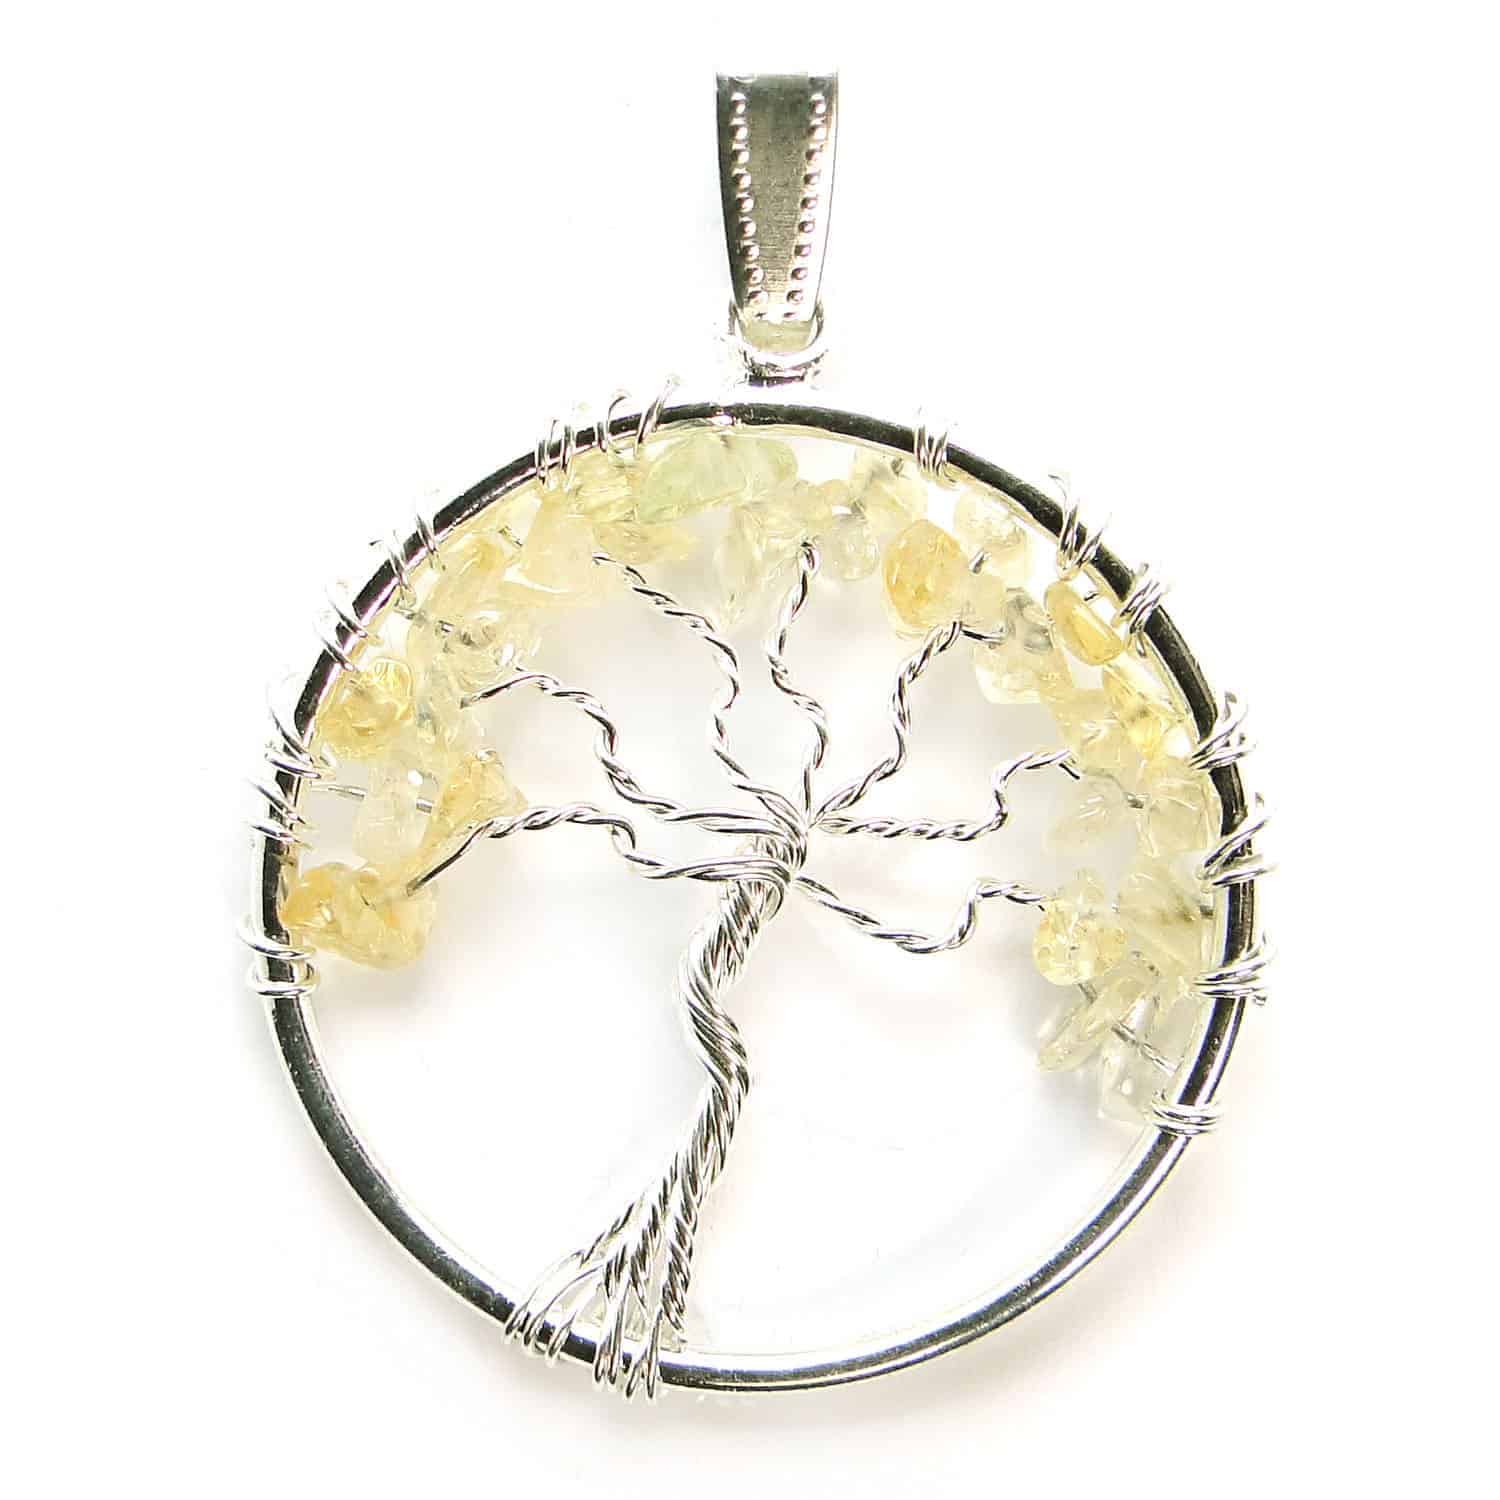 14K Gold and Diamond Circular Tree of Life Necklace, Christian Jewelry | My  Jerusalem Store